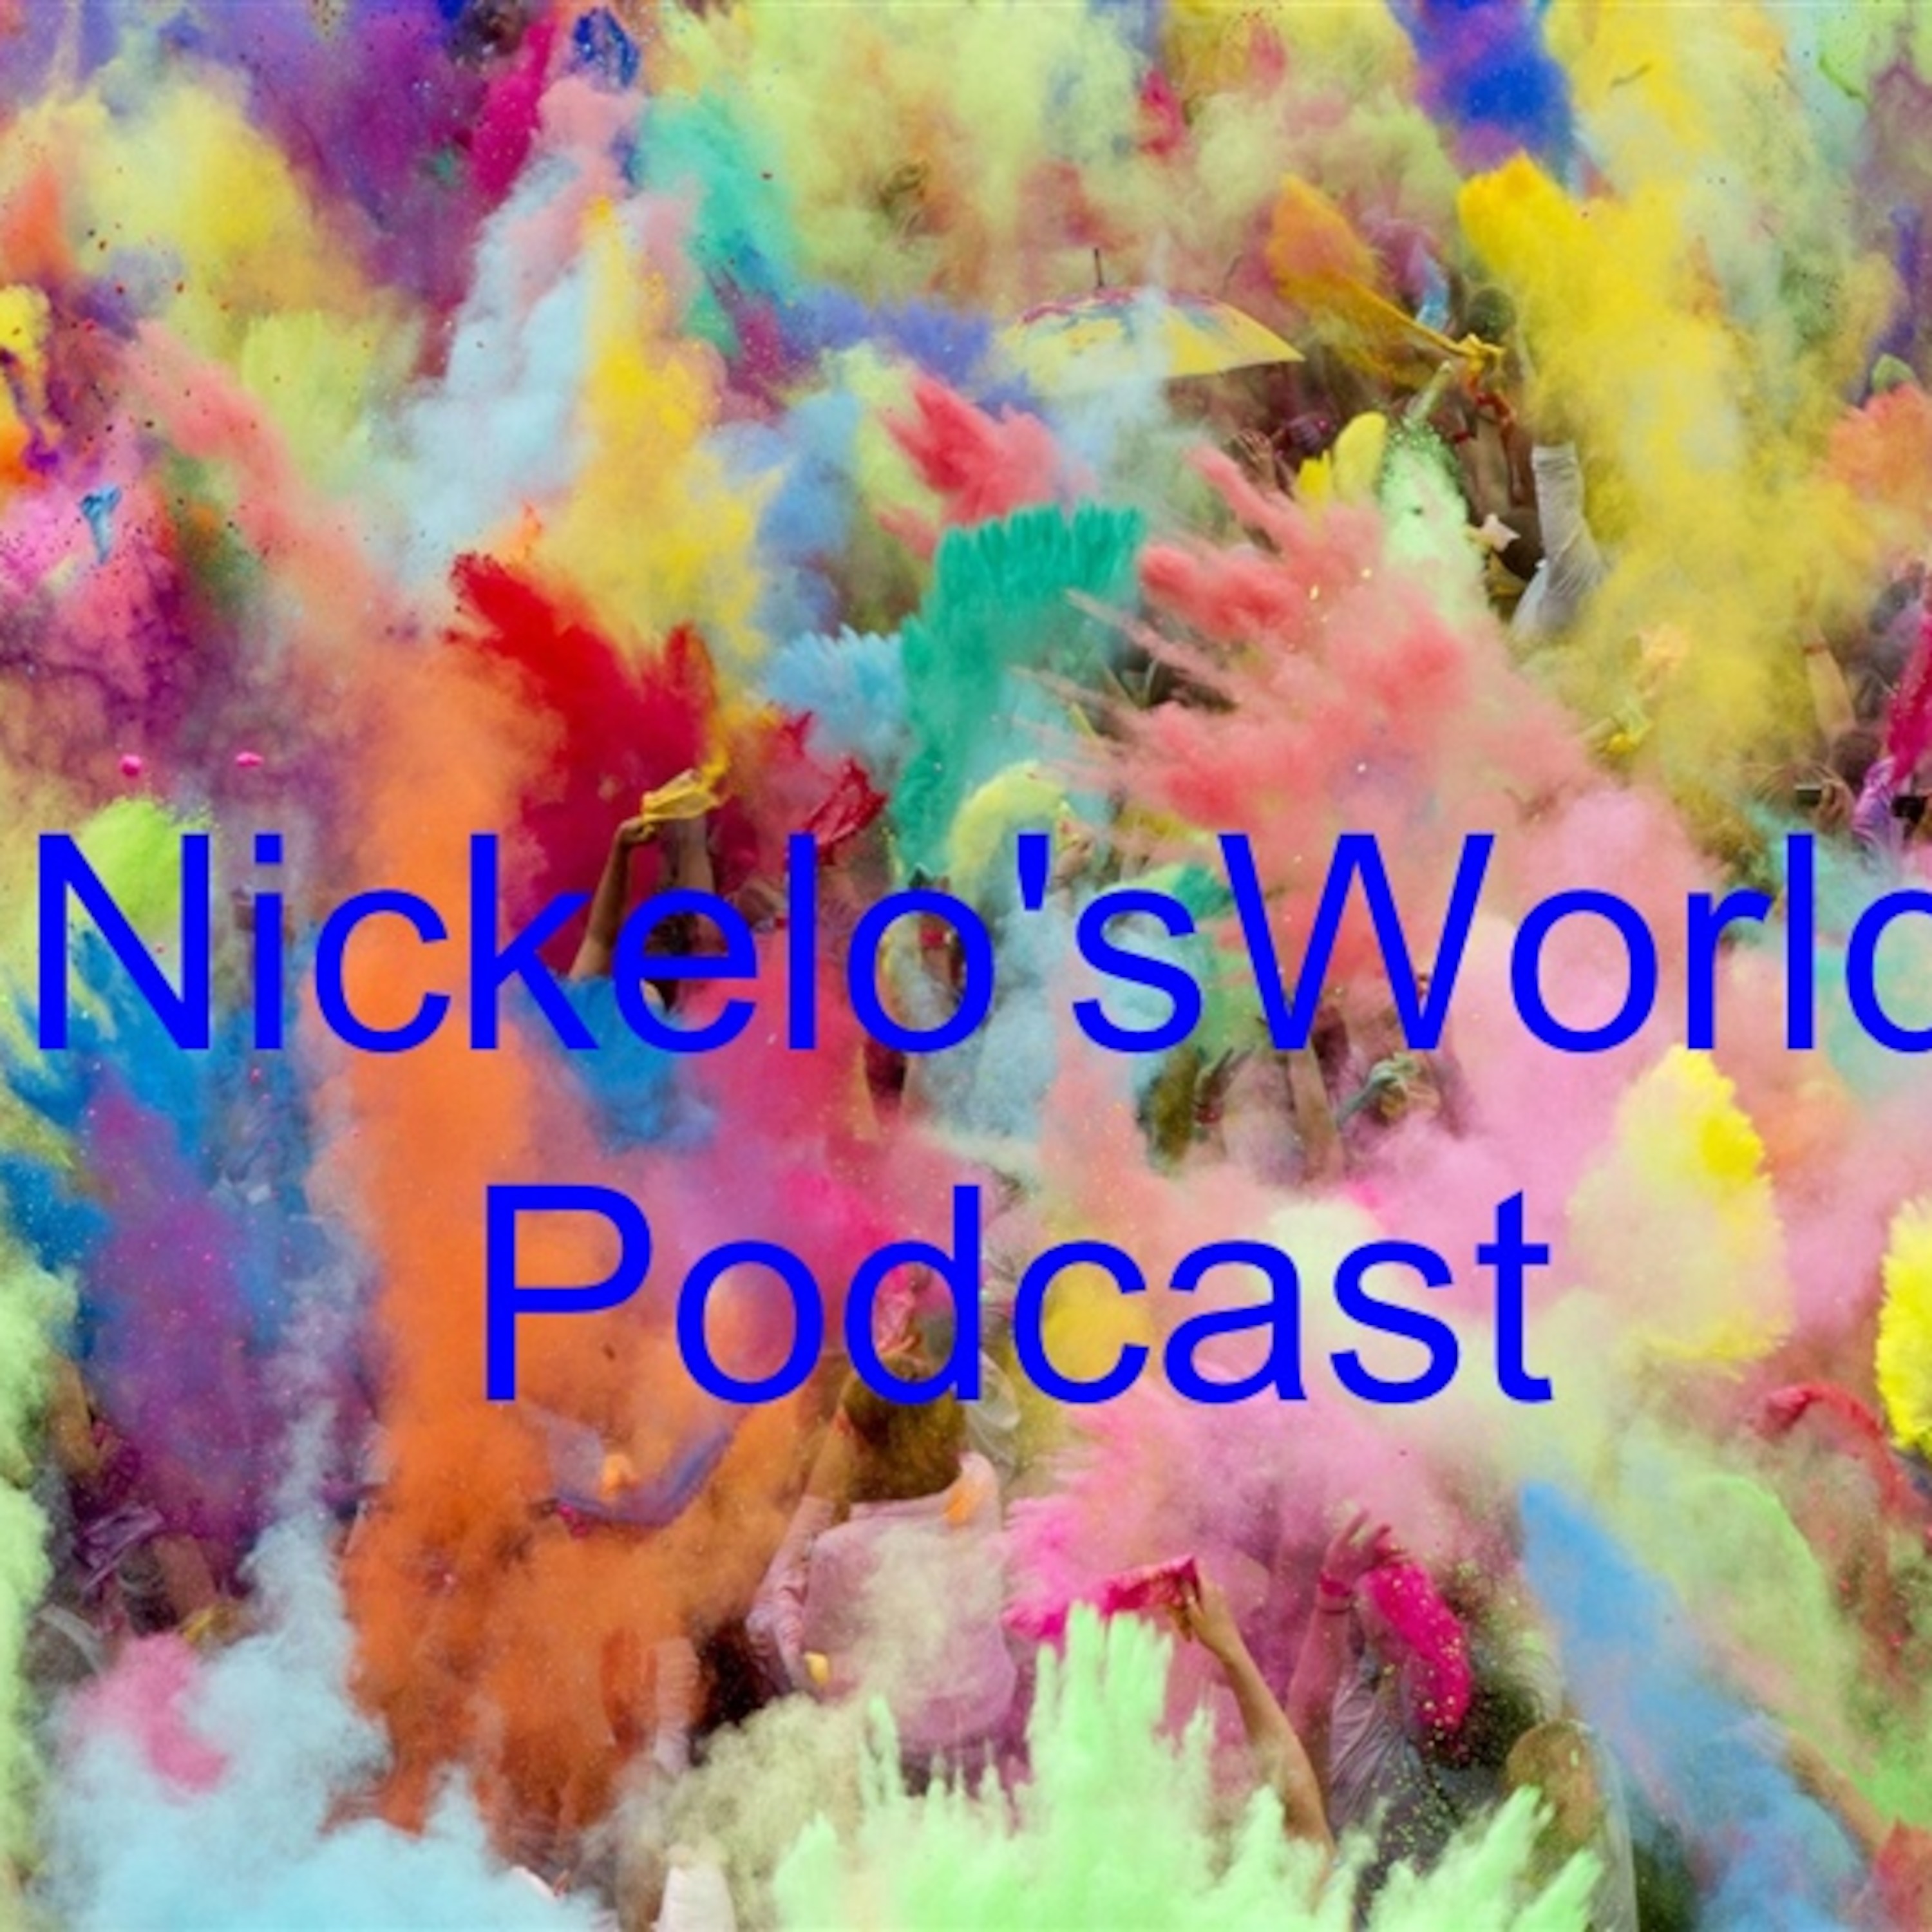 Nickelo'sWorld Podcast